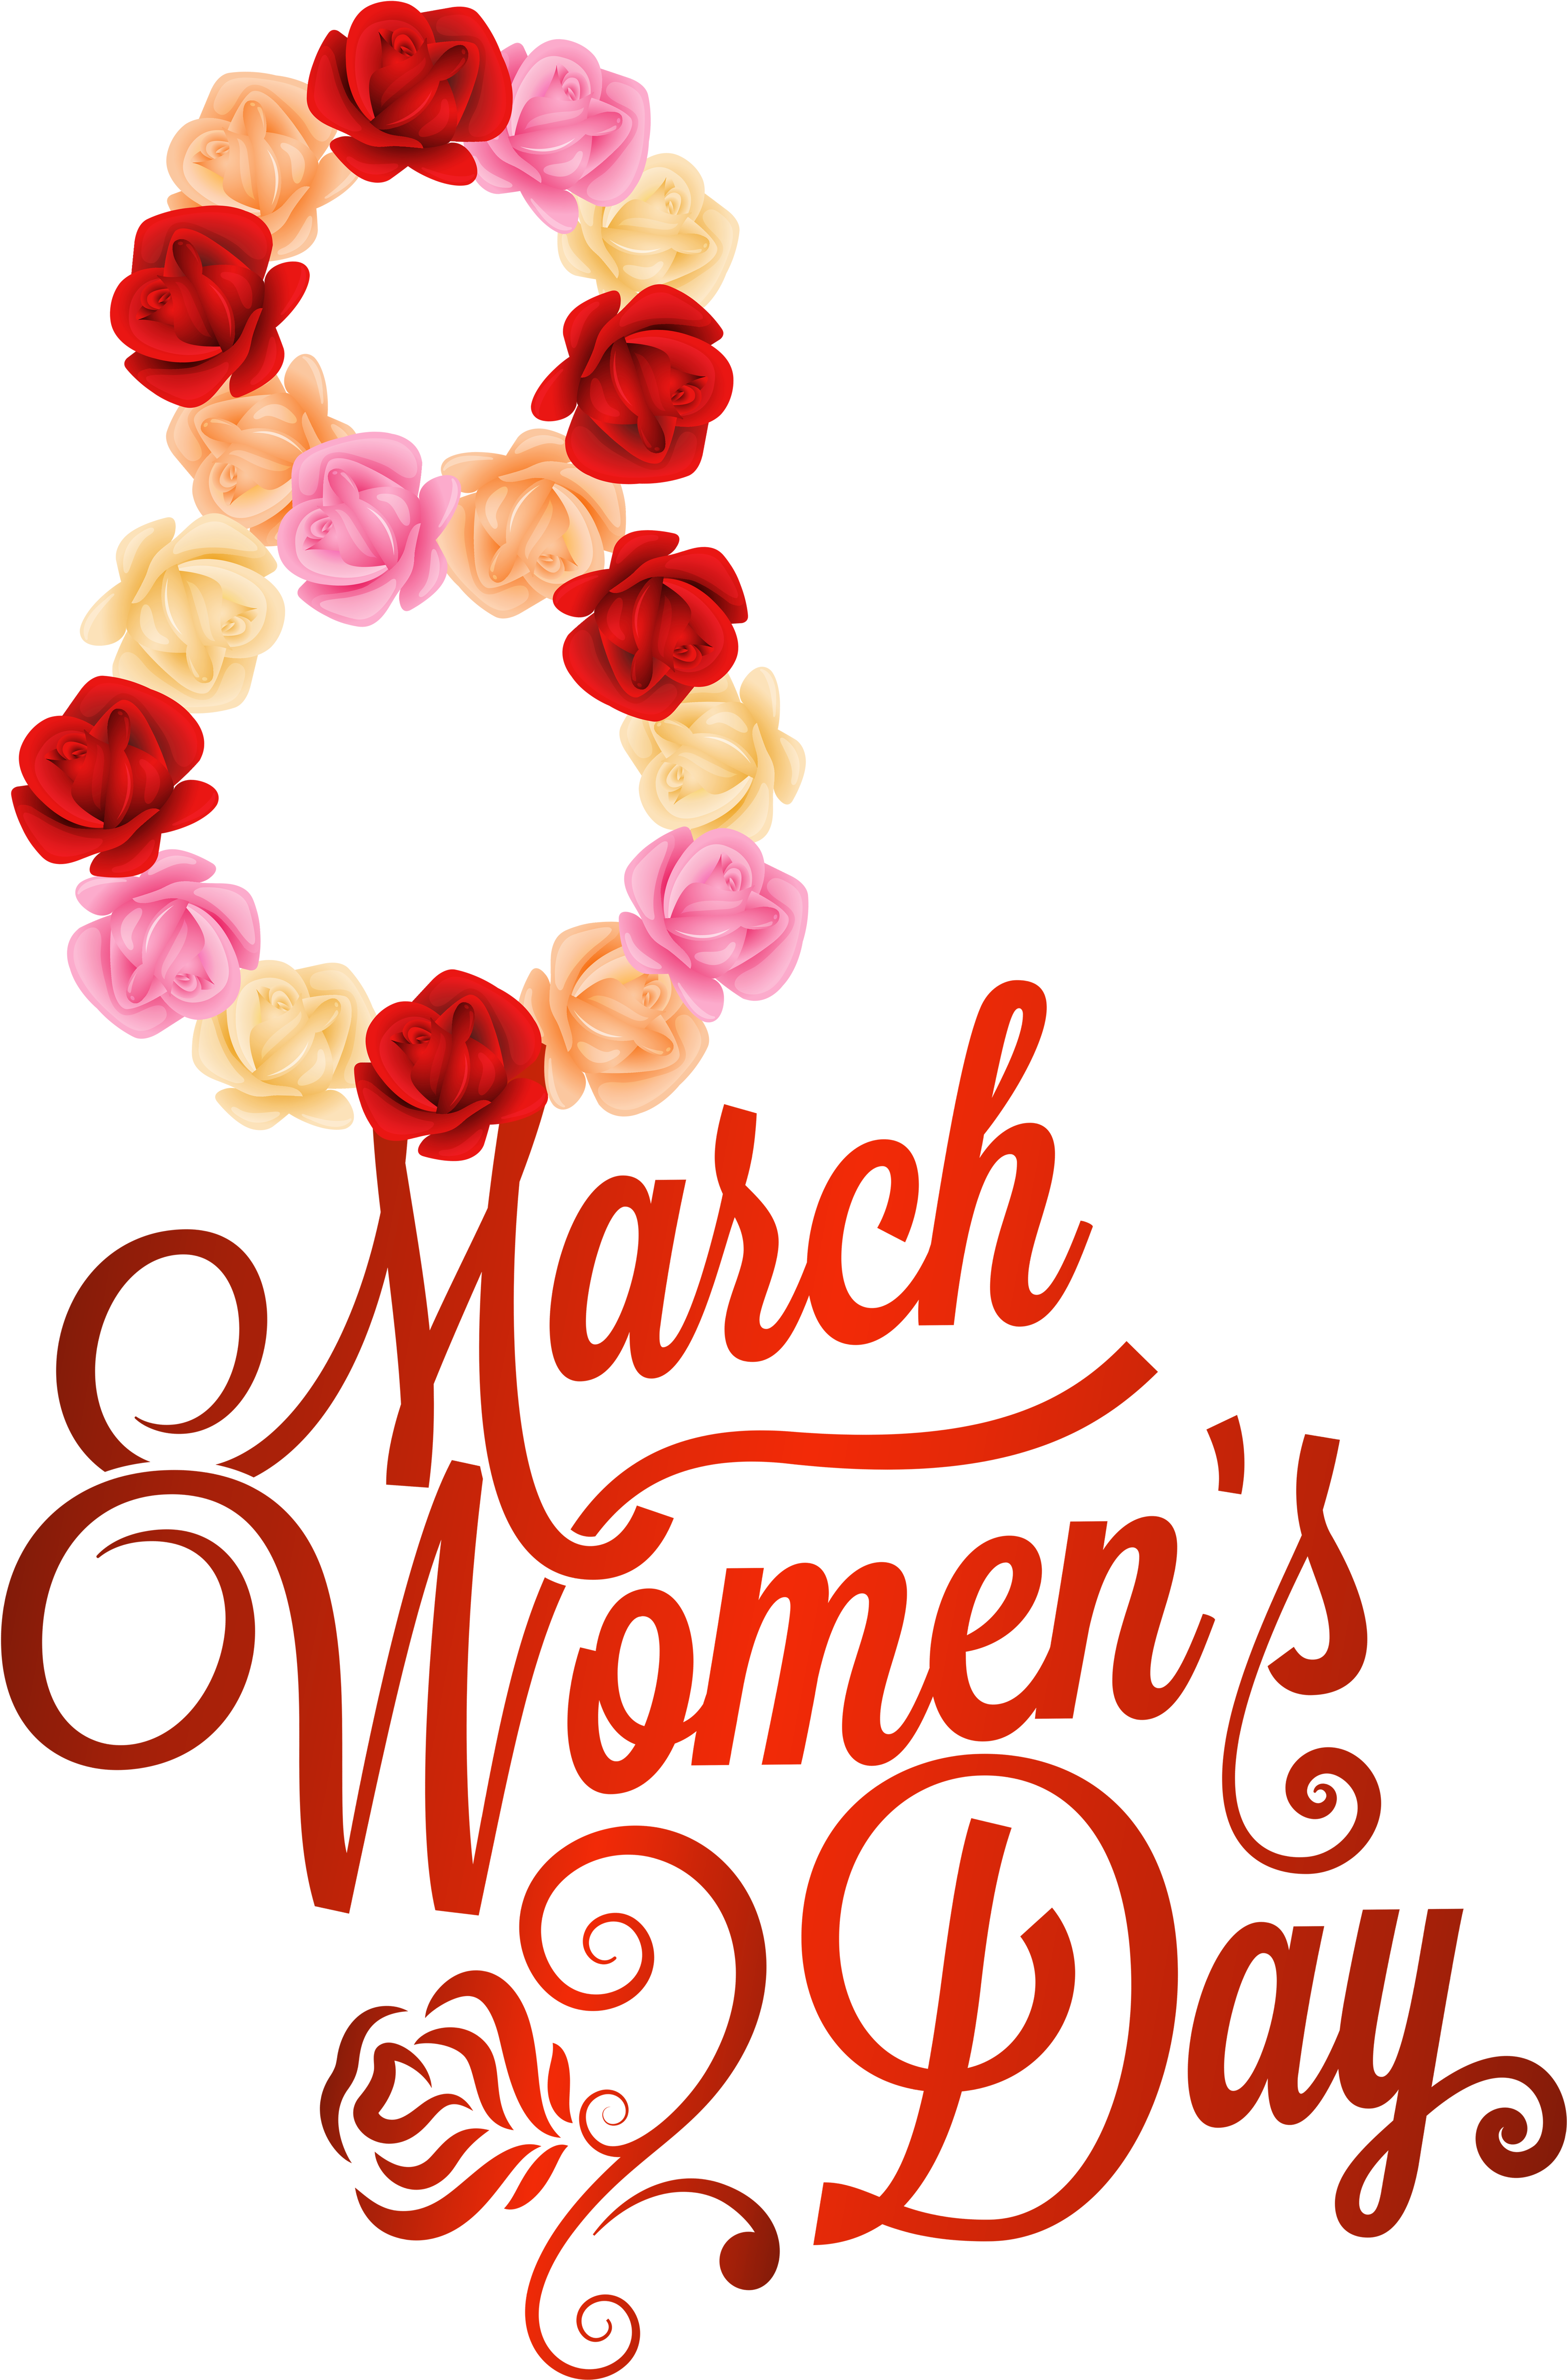 Happy women's Day открытки. Women day congratulations